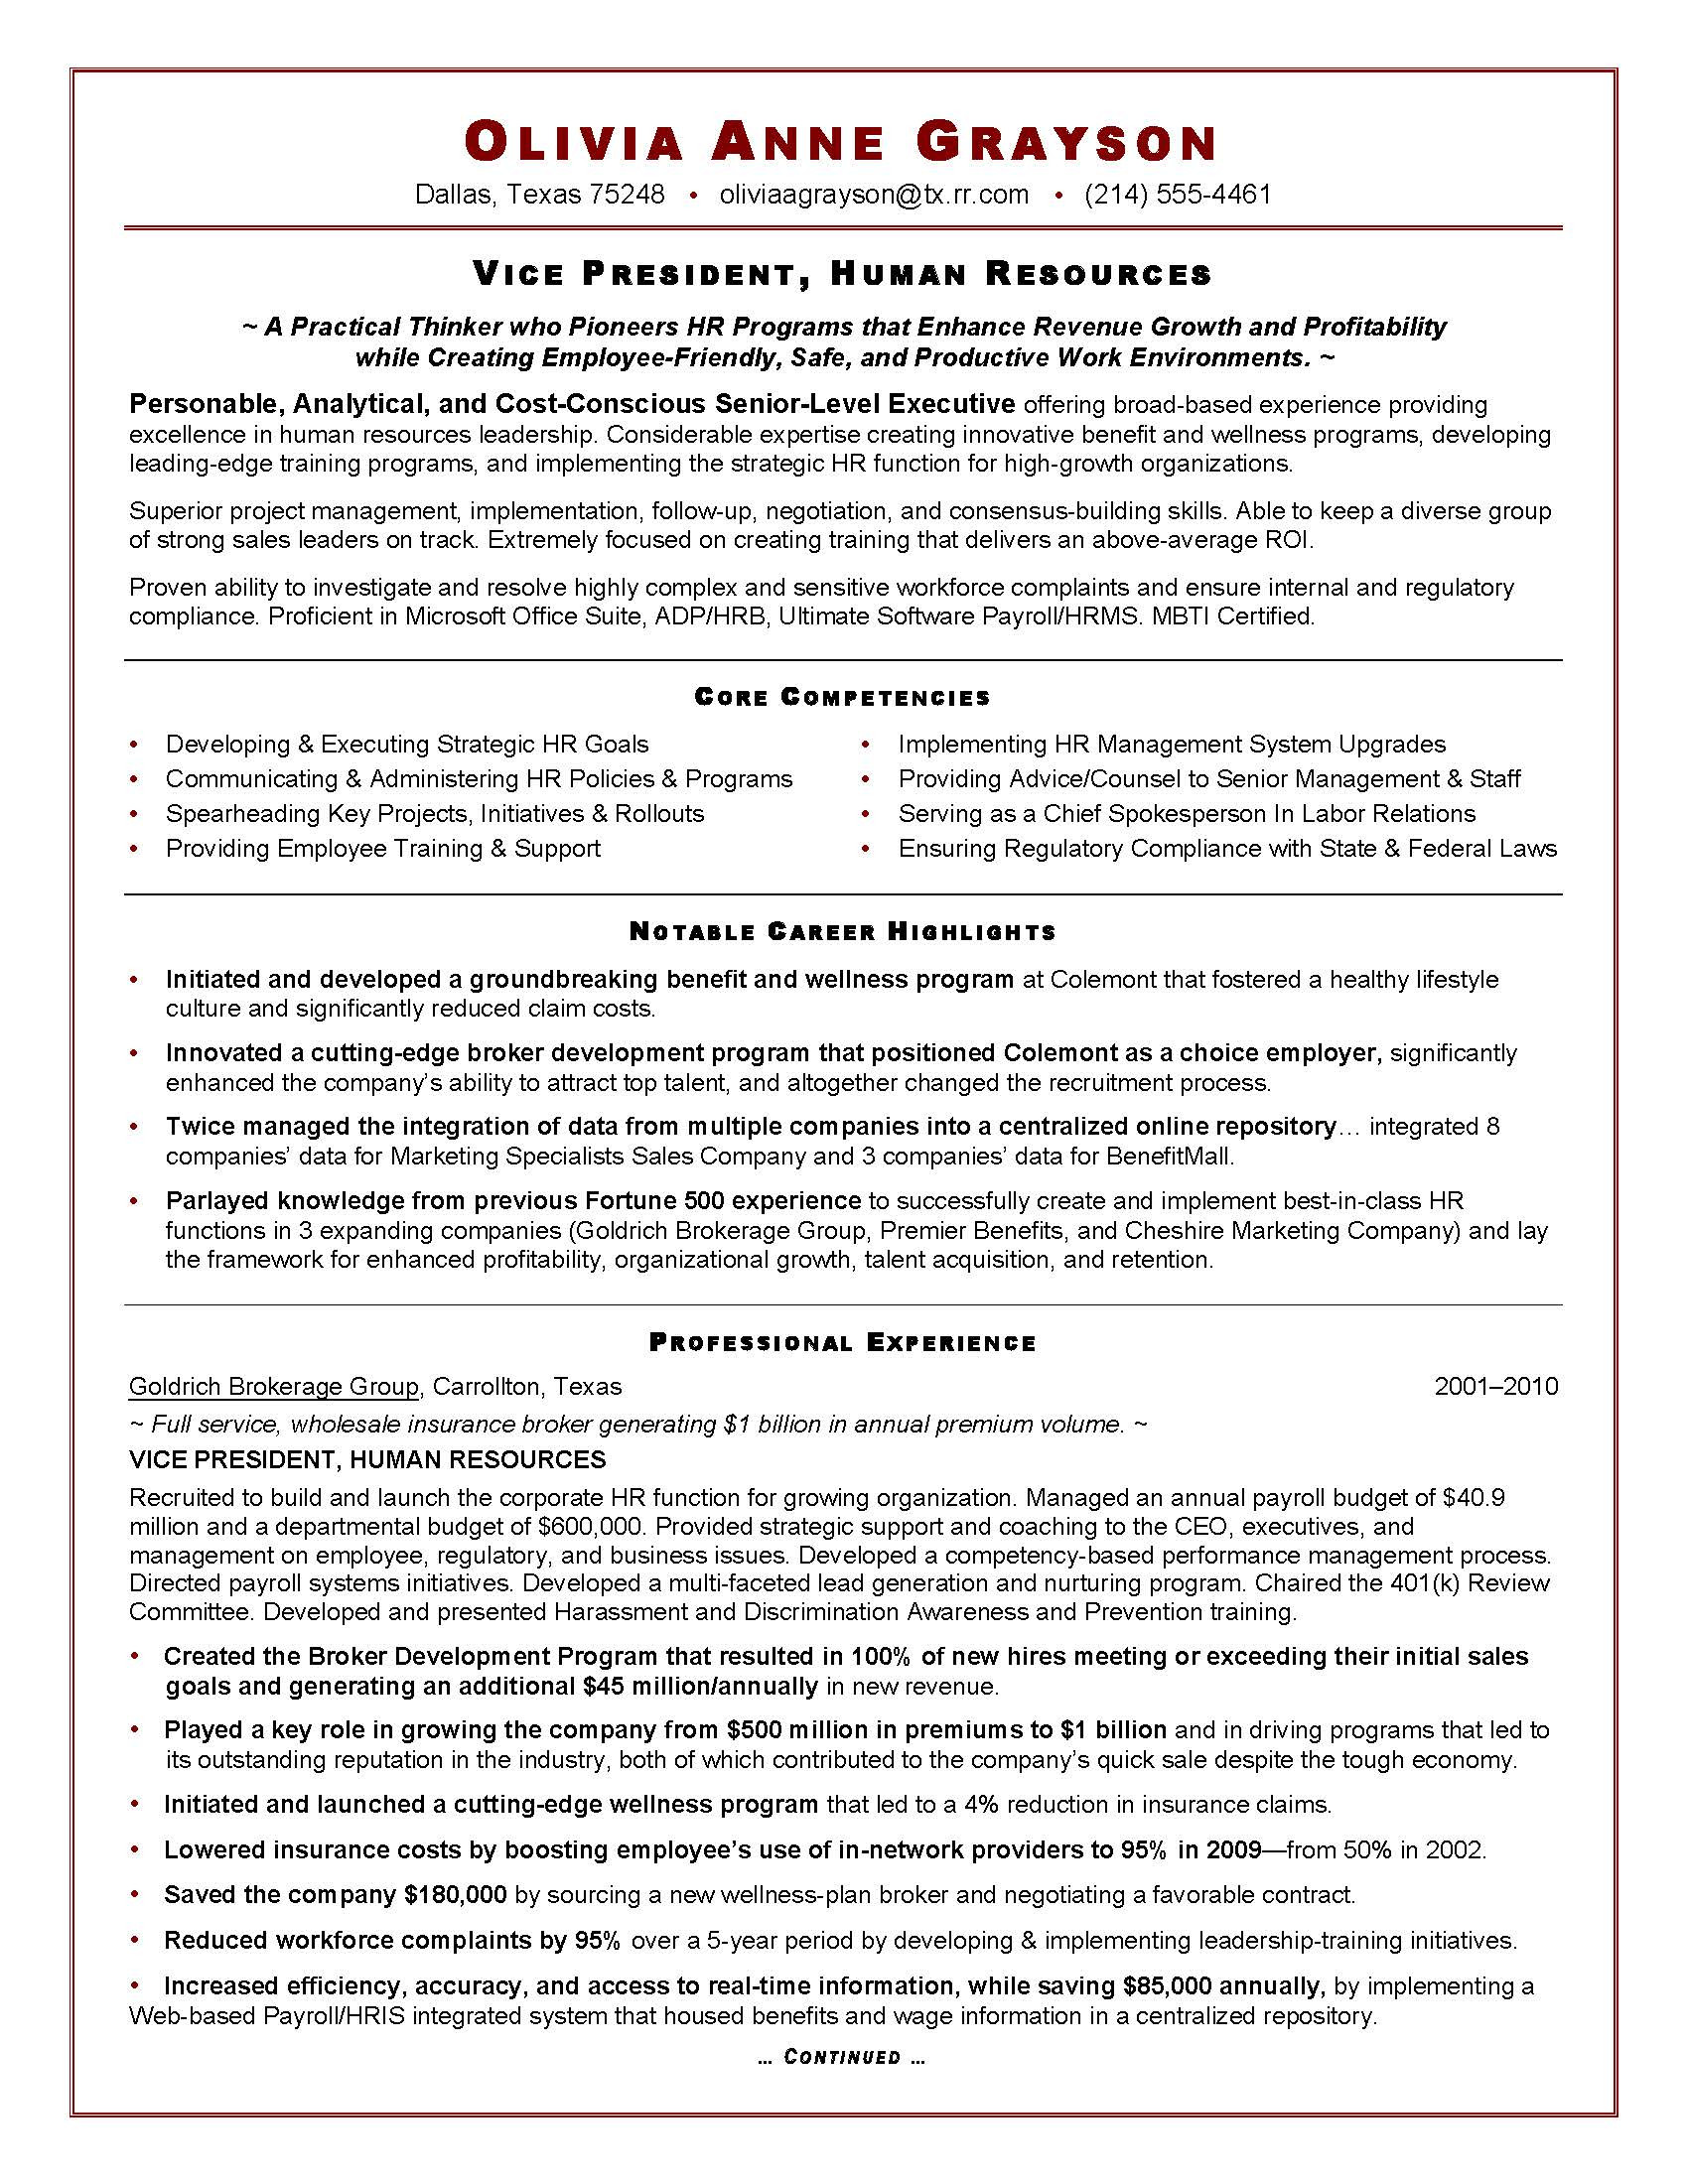 Vp Of Human Resources Resume Sample Executive Resume Sample for Hr Vp1 – Pdf format E-database.org